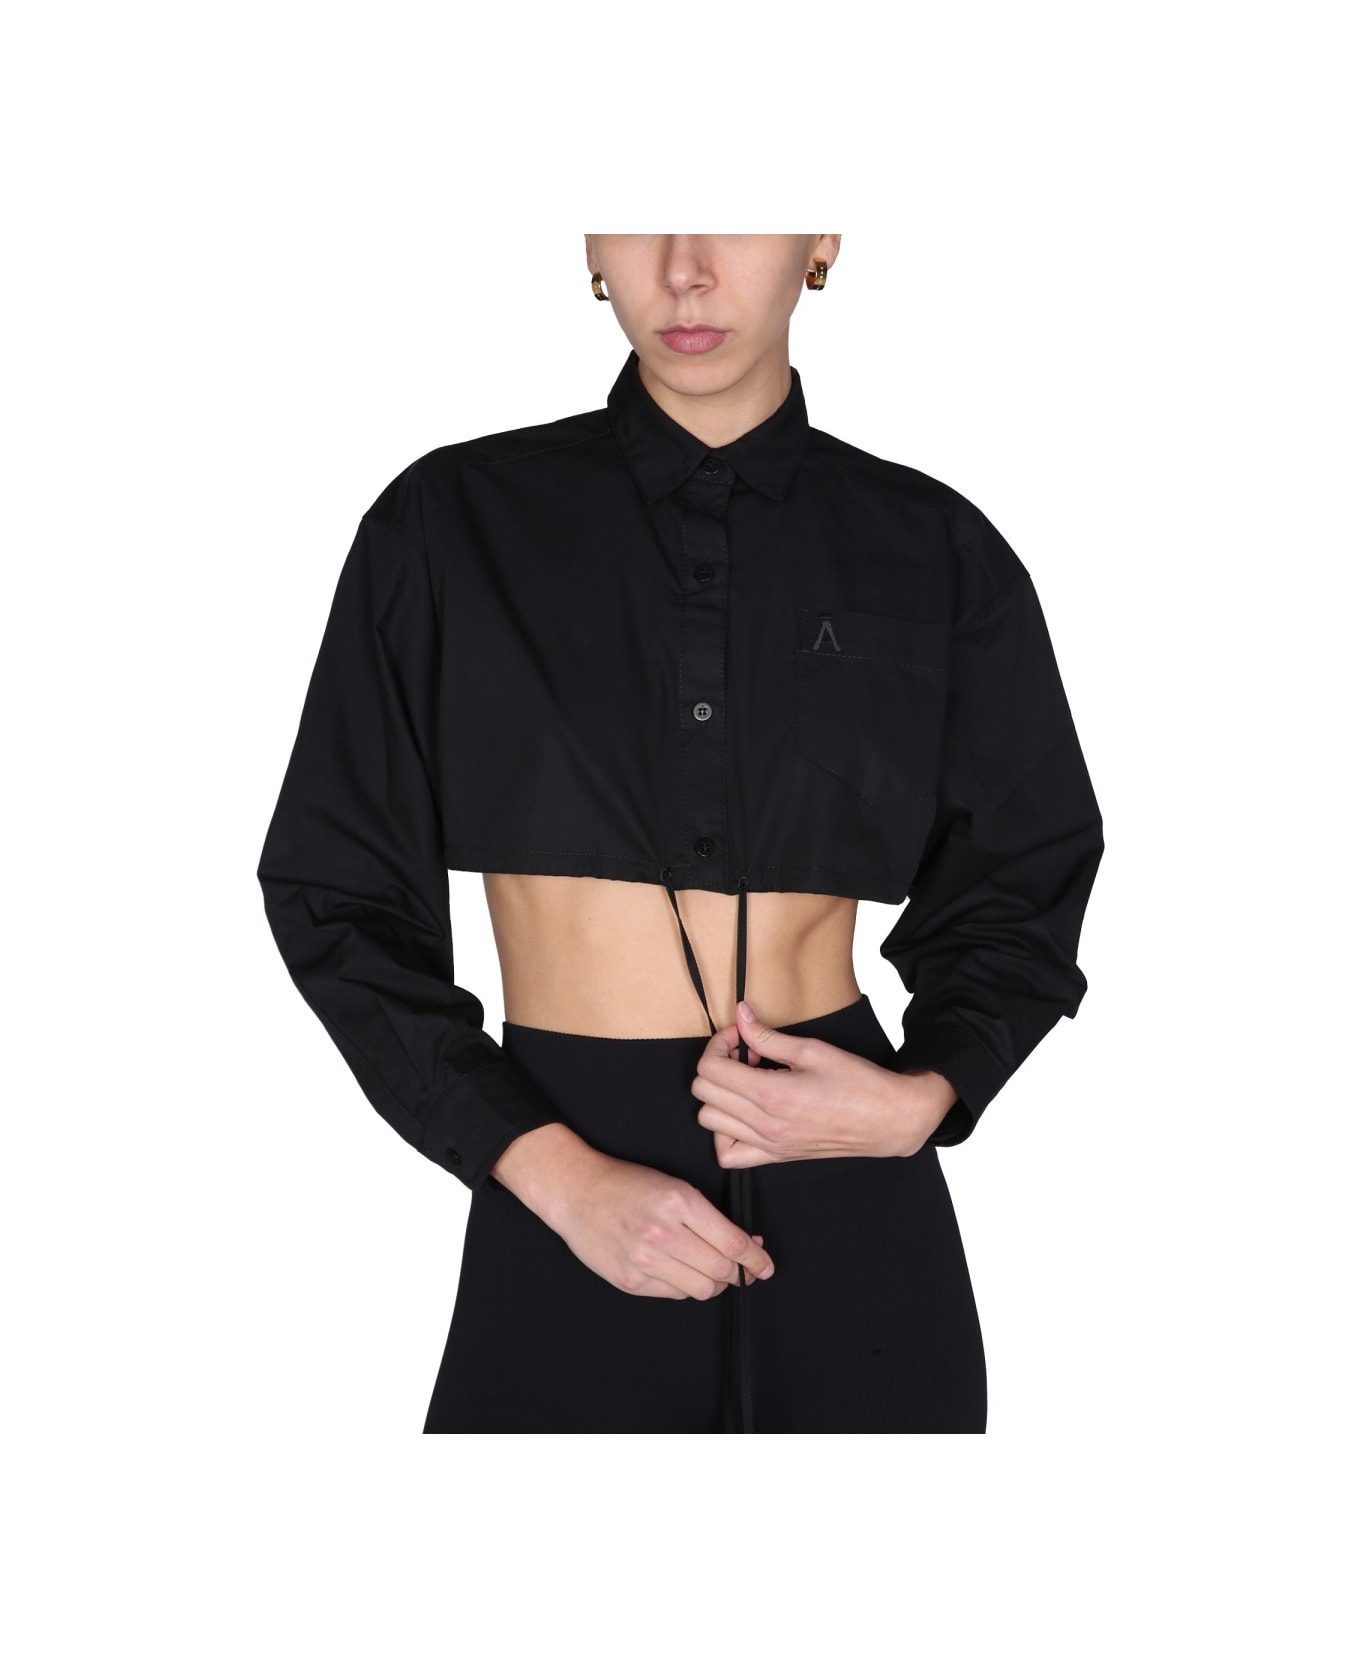 ANDREĀDAMO Cropped Shirt - BLACK